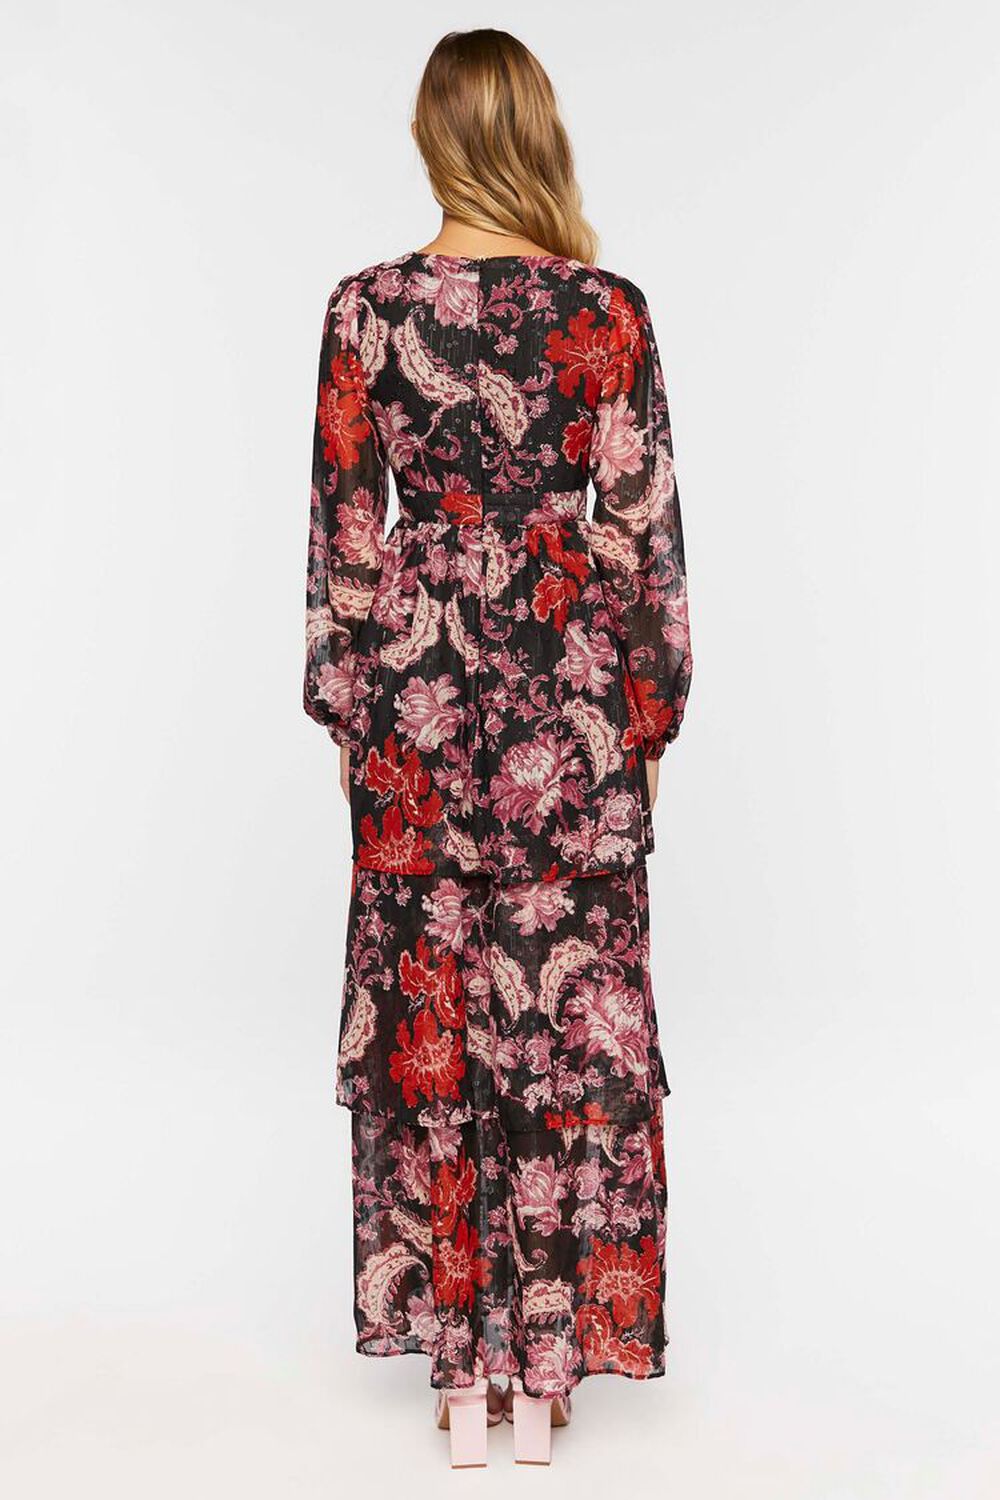 RED/MULTI Floral Chiffon Maxi Dress, image 3